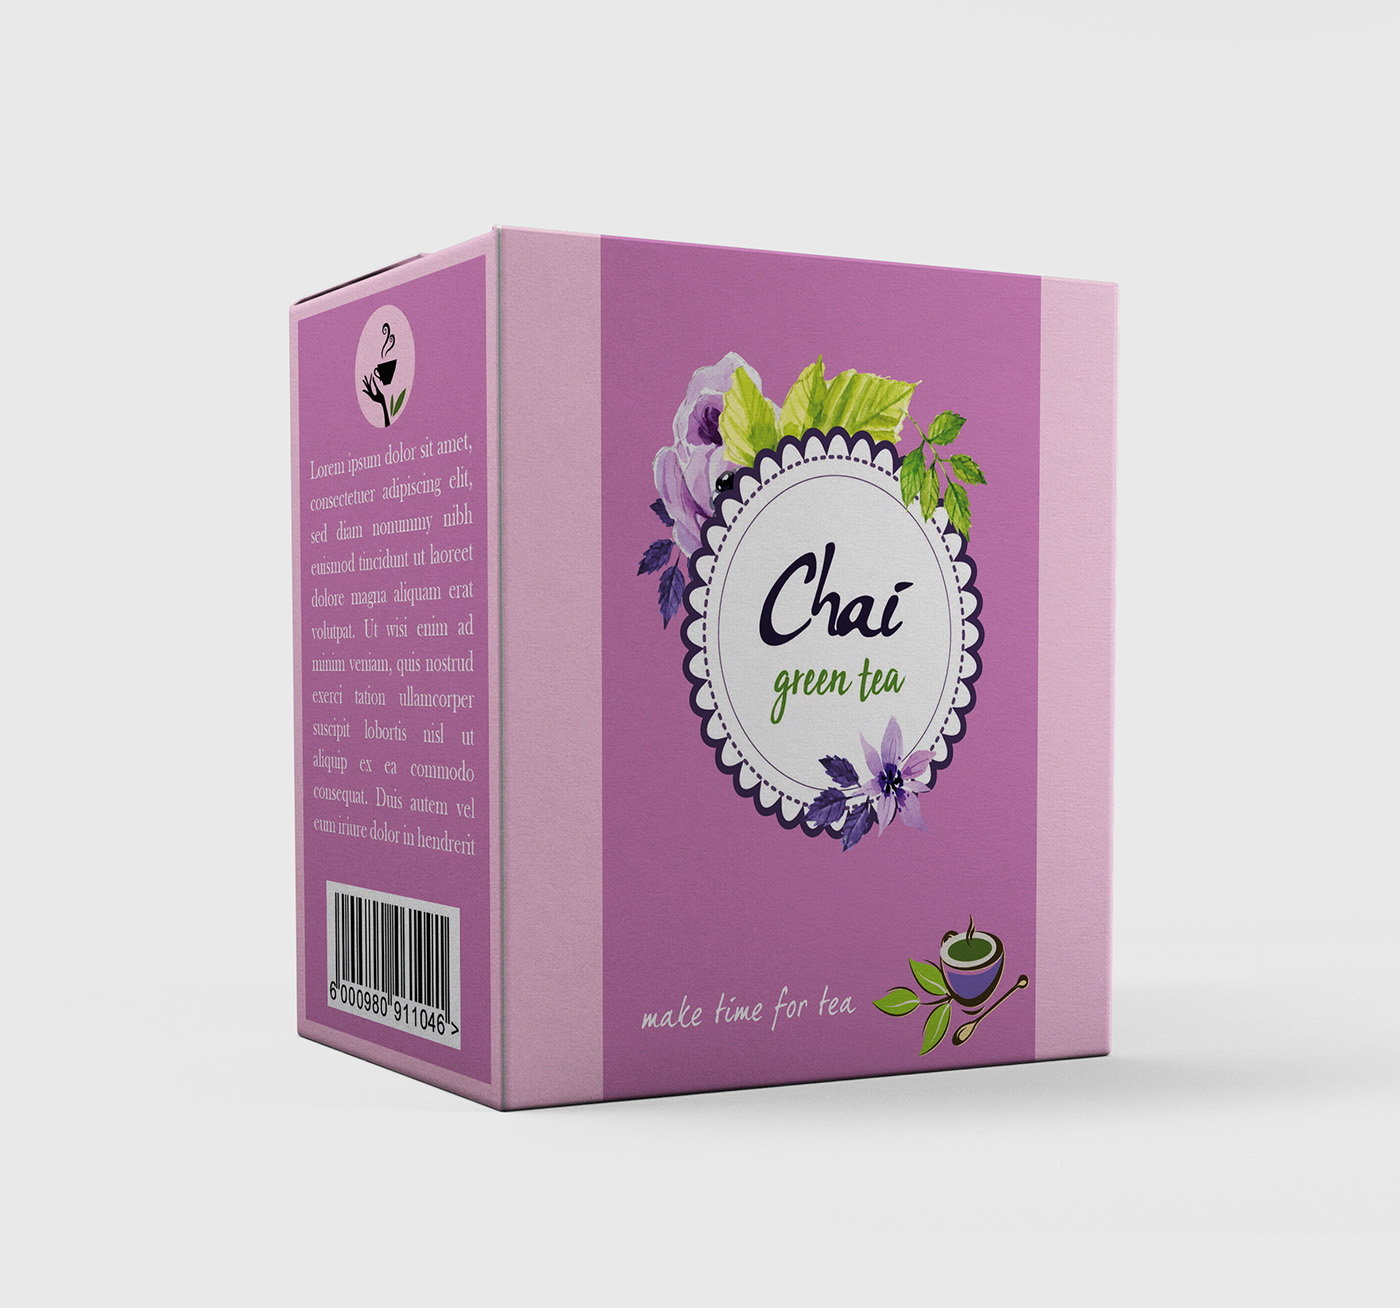 Greentea chai green tea Packaging design drinking